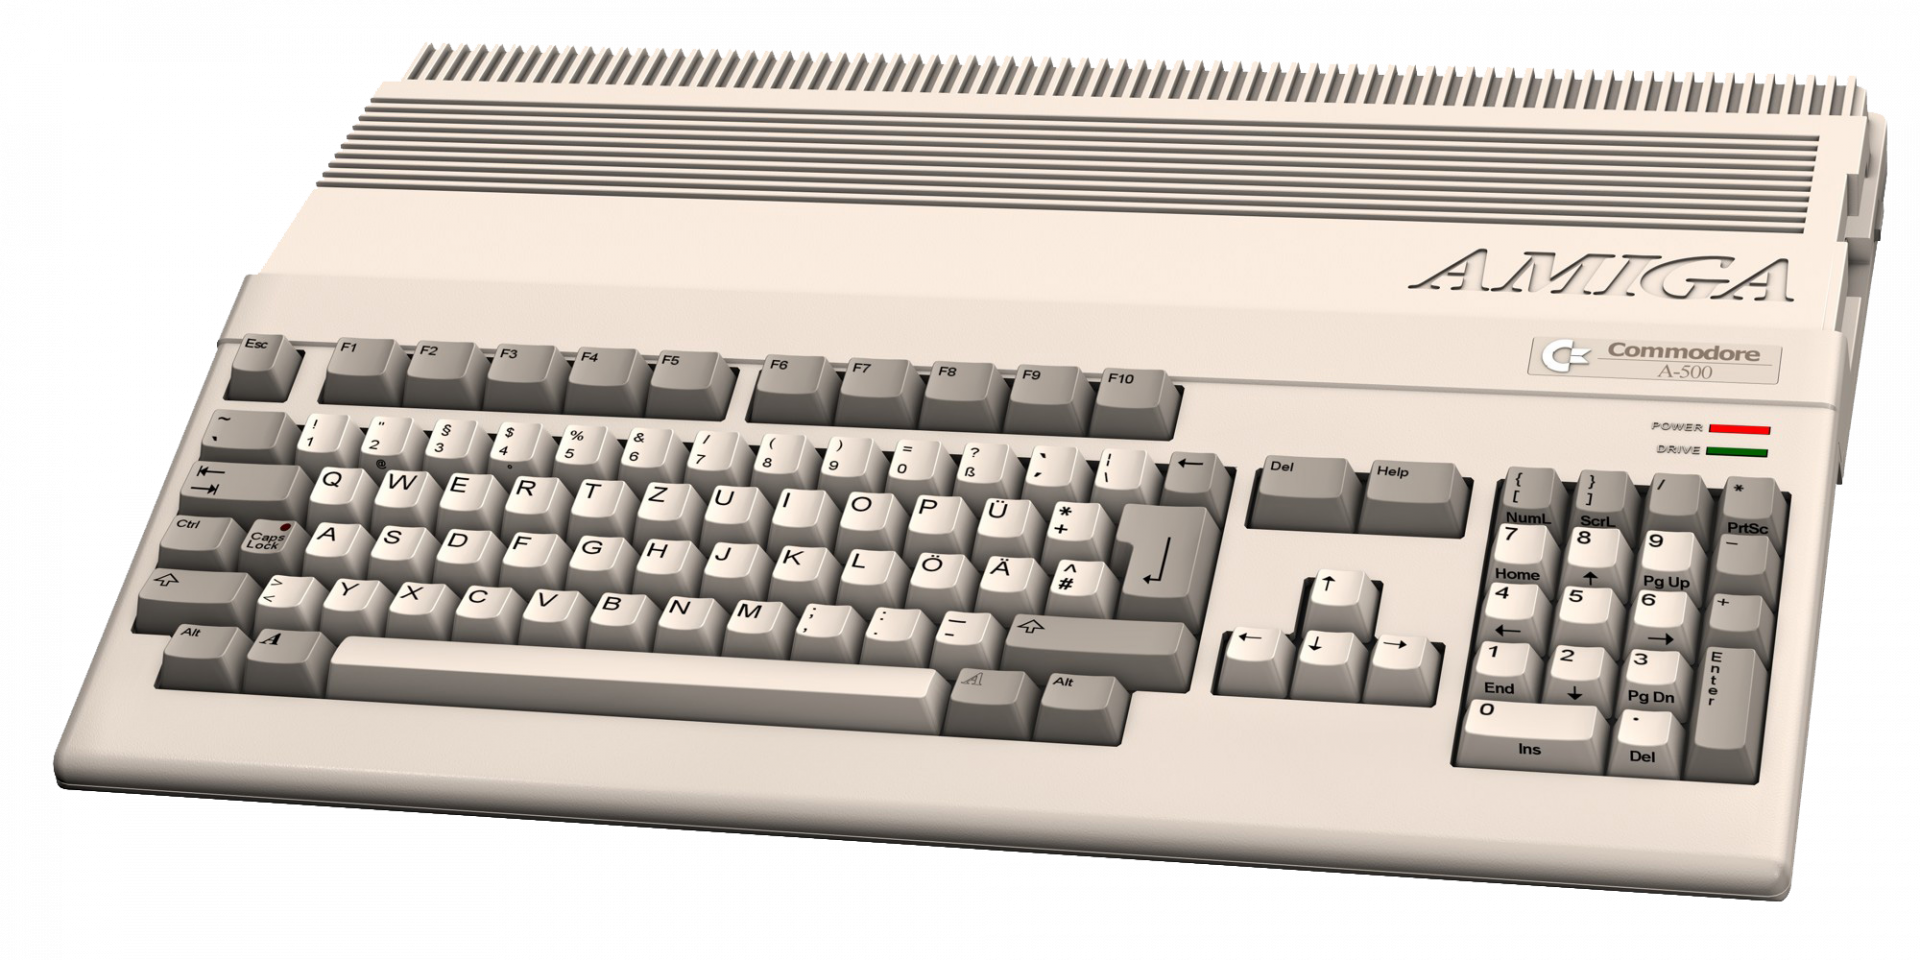 Amiga 500 - HomeComputerMuseum